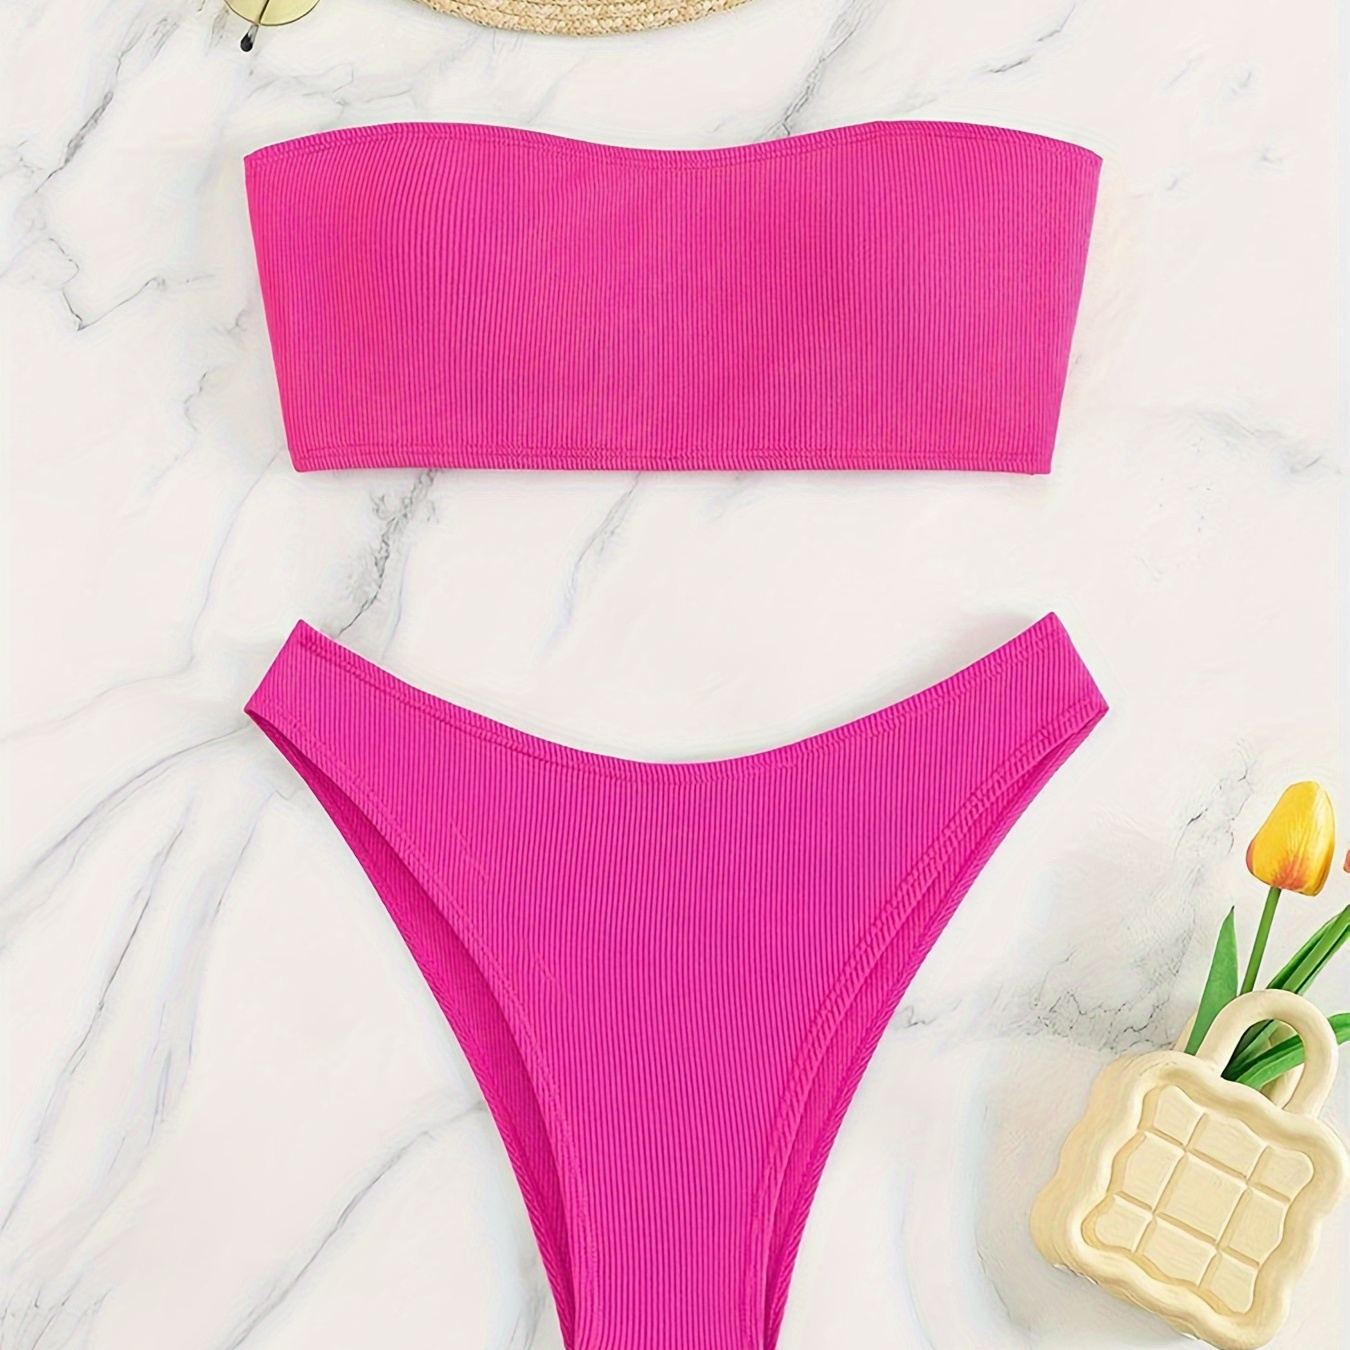 

Women's Two-piece Ribbed Bikini Set, Strapless Bandeau Top & High Cut Bottoms, Stretchy Swimwear, Summer Beachwear